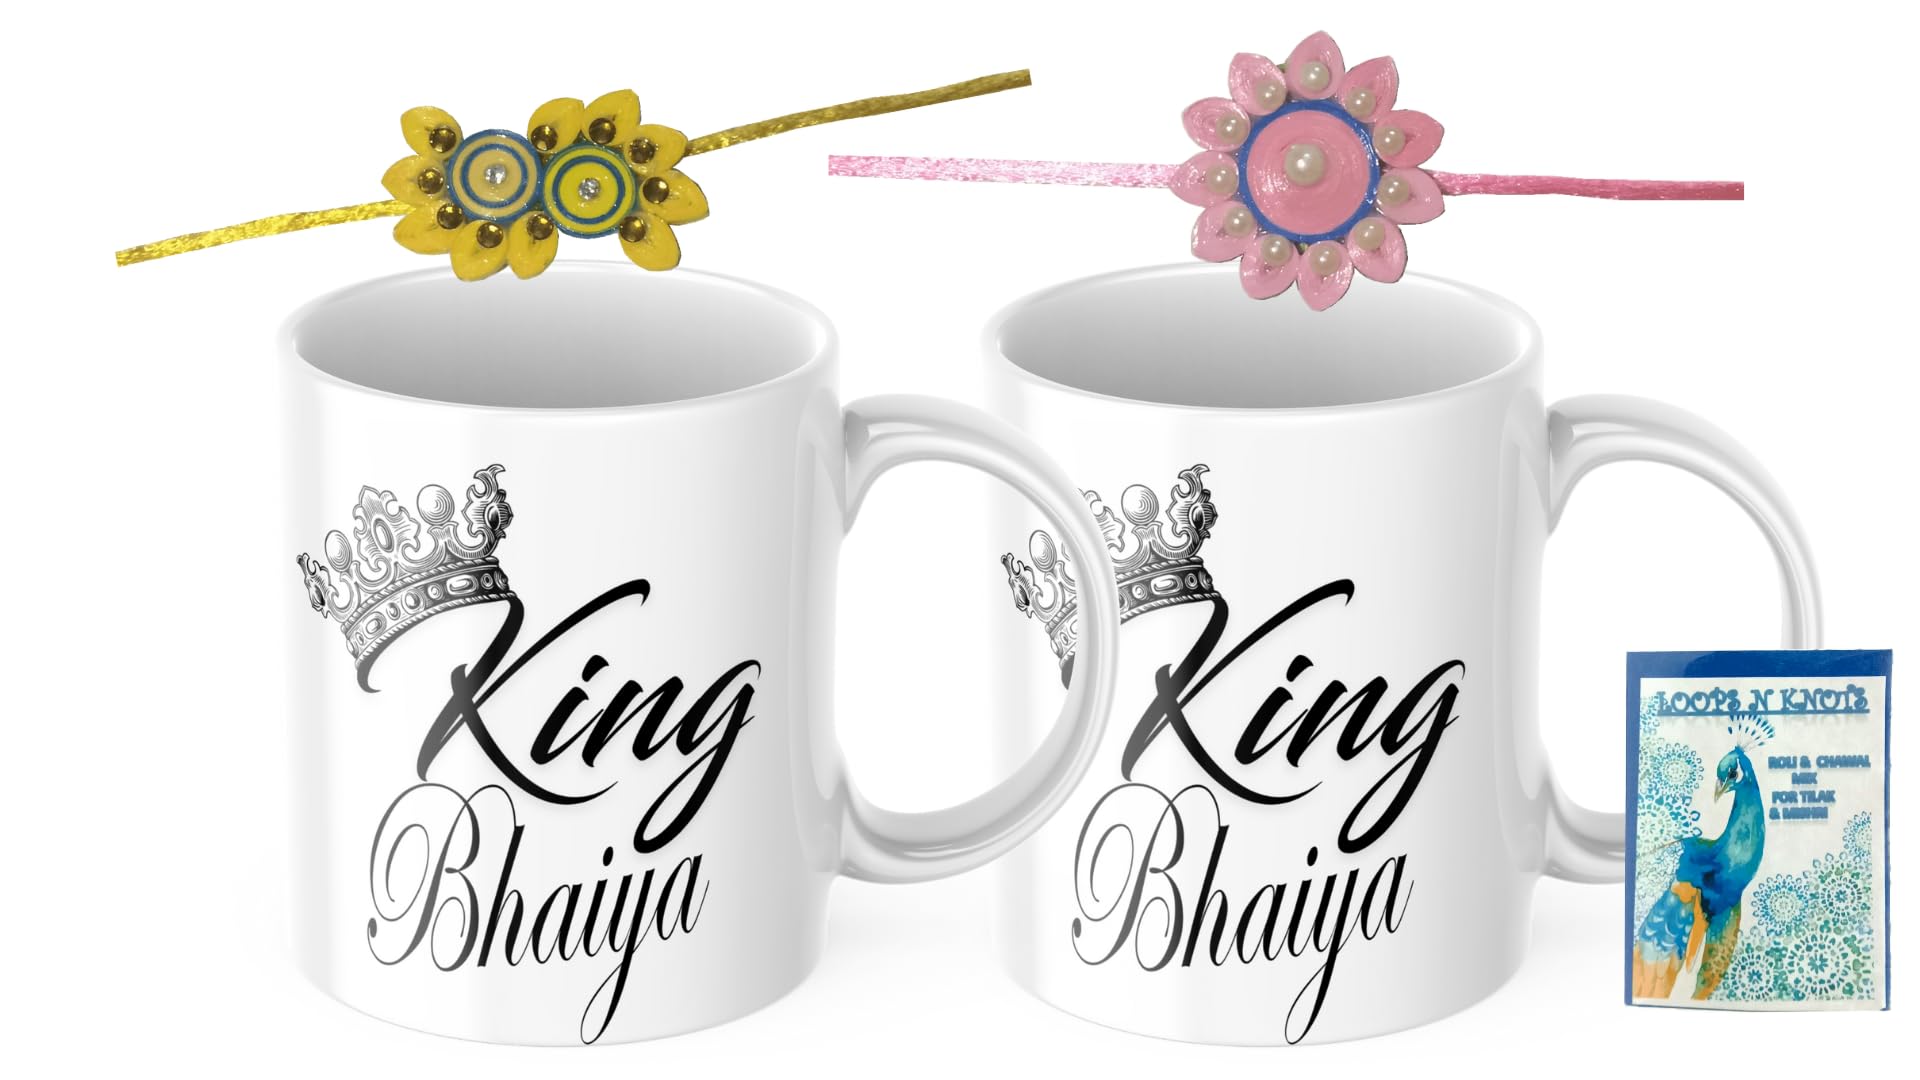 LOOPS N KNOTS Rakhi for Brother with Printed Ceramic Mug and Rakhi Combo |Pack of 2 Mugs& 2 Rakhi (Roli Chawal, Rakhi, Printed Mug,) | Best Rakhi Gift for Brother R&M386